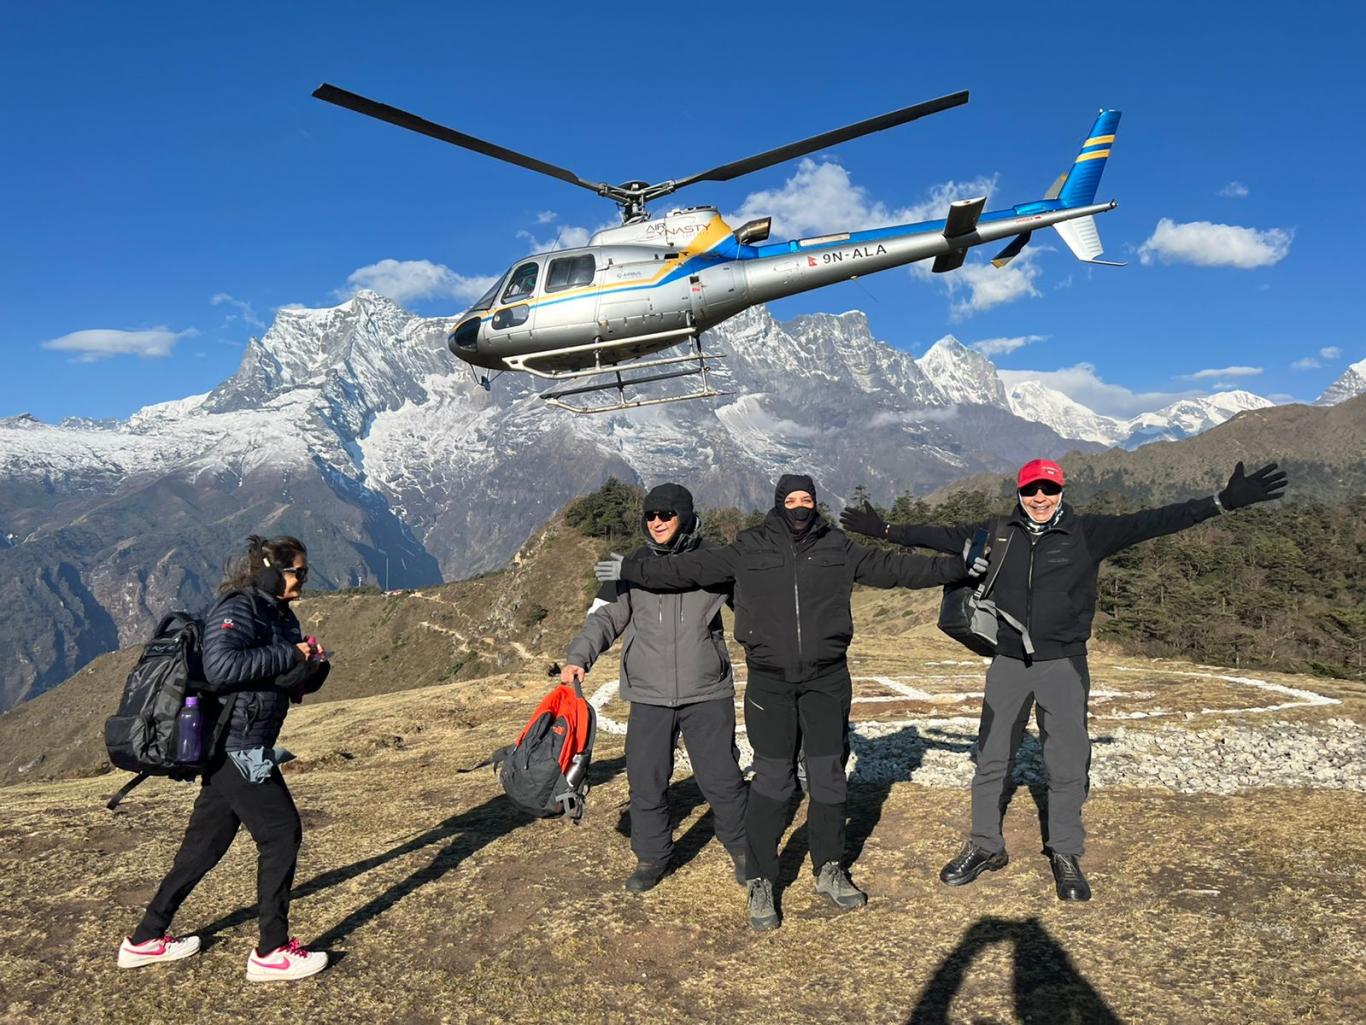 Short Everest Base Camp Trek with Helicopter Return Gallery Image 1 